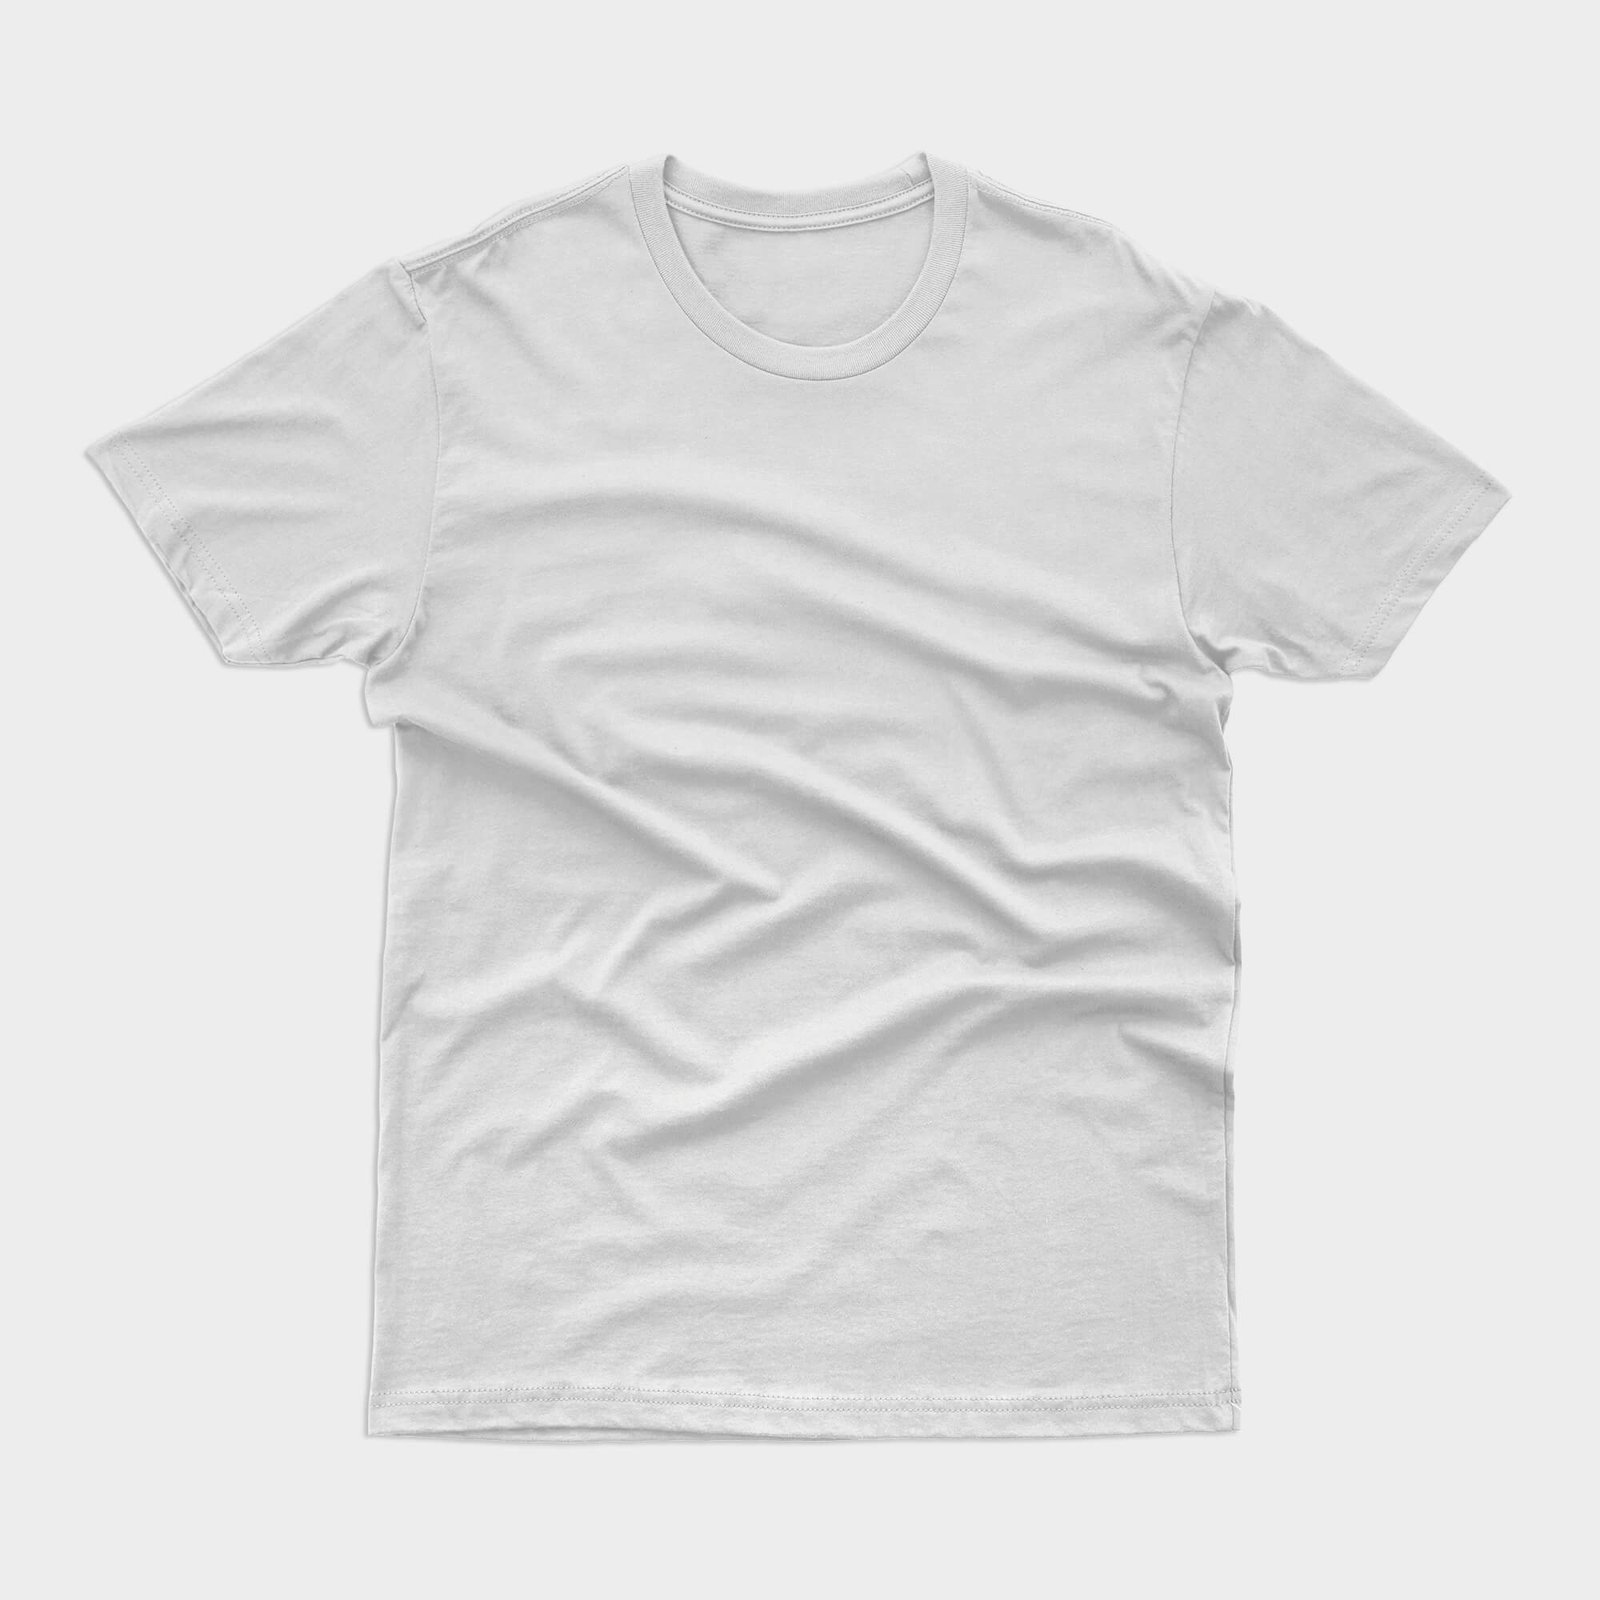 Blank Tee Shirt Mockup Free PSD Template